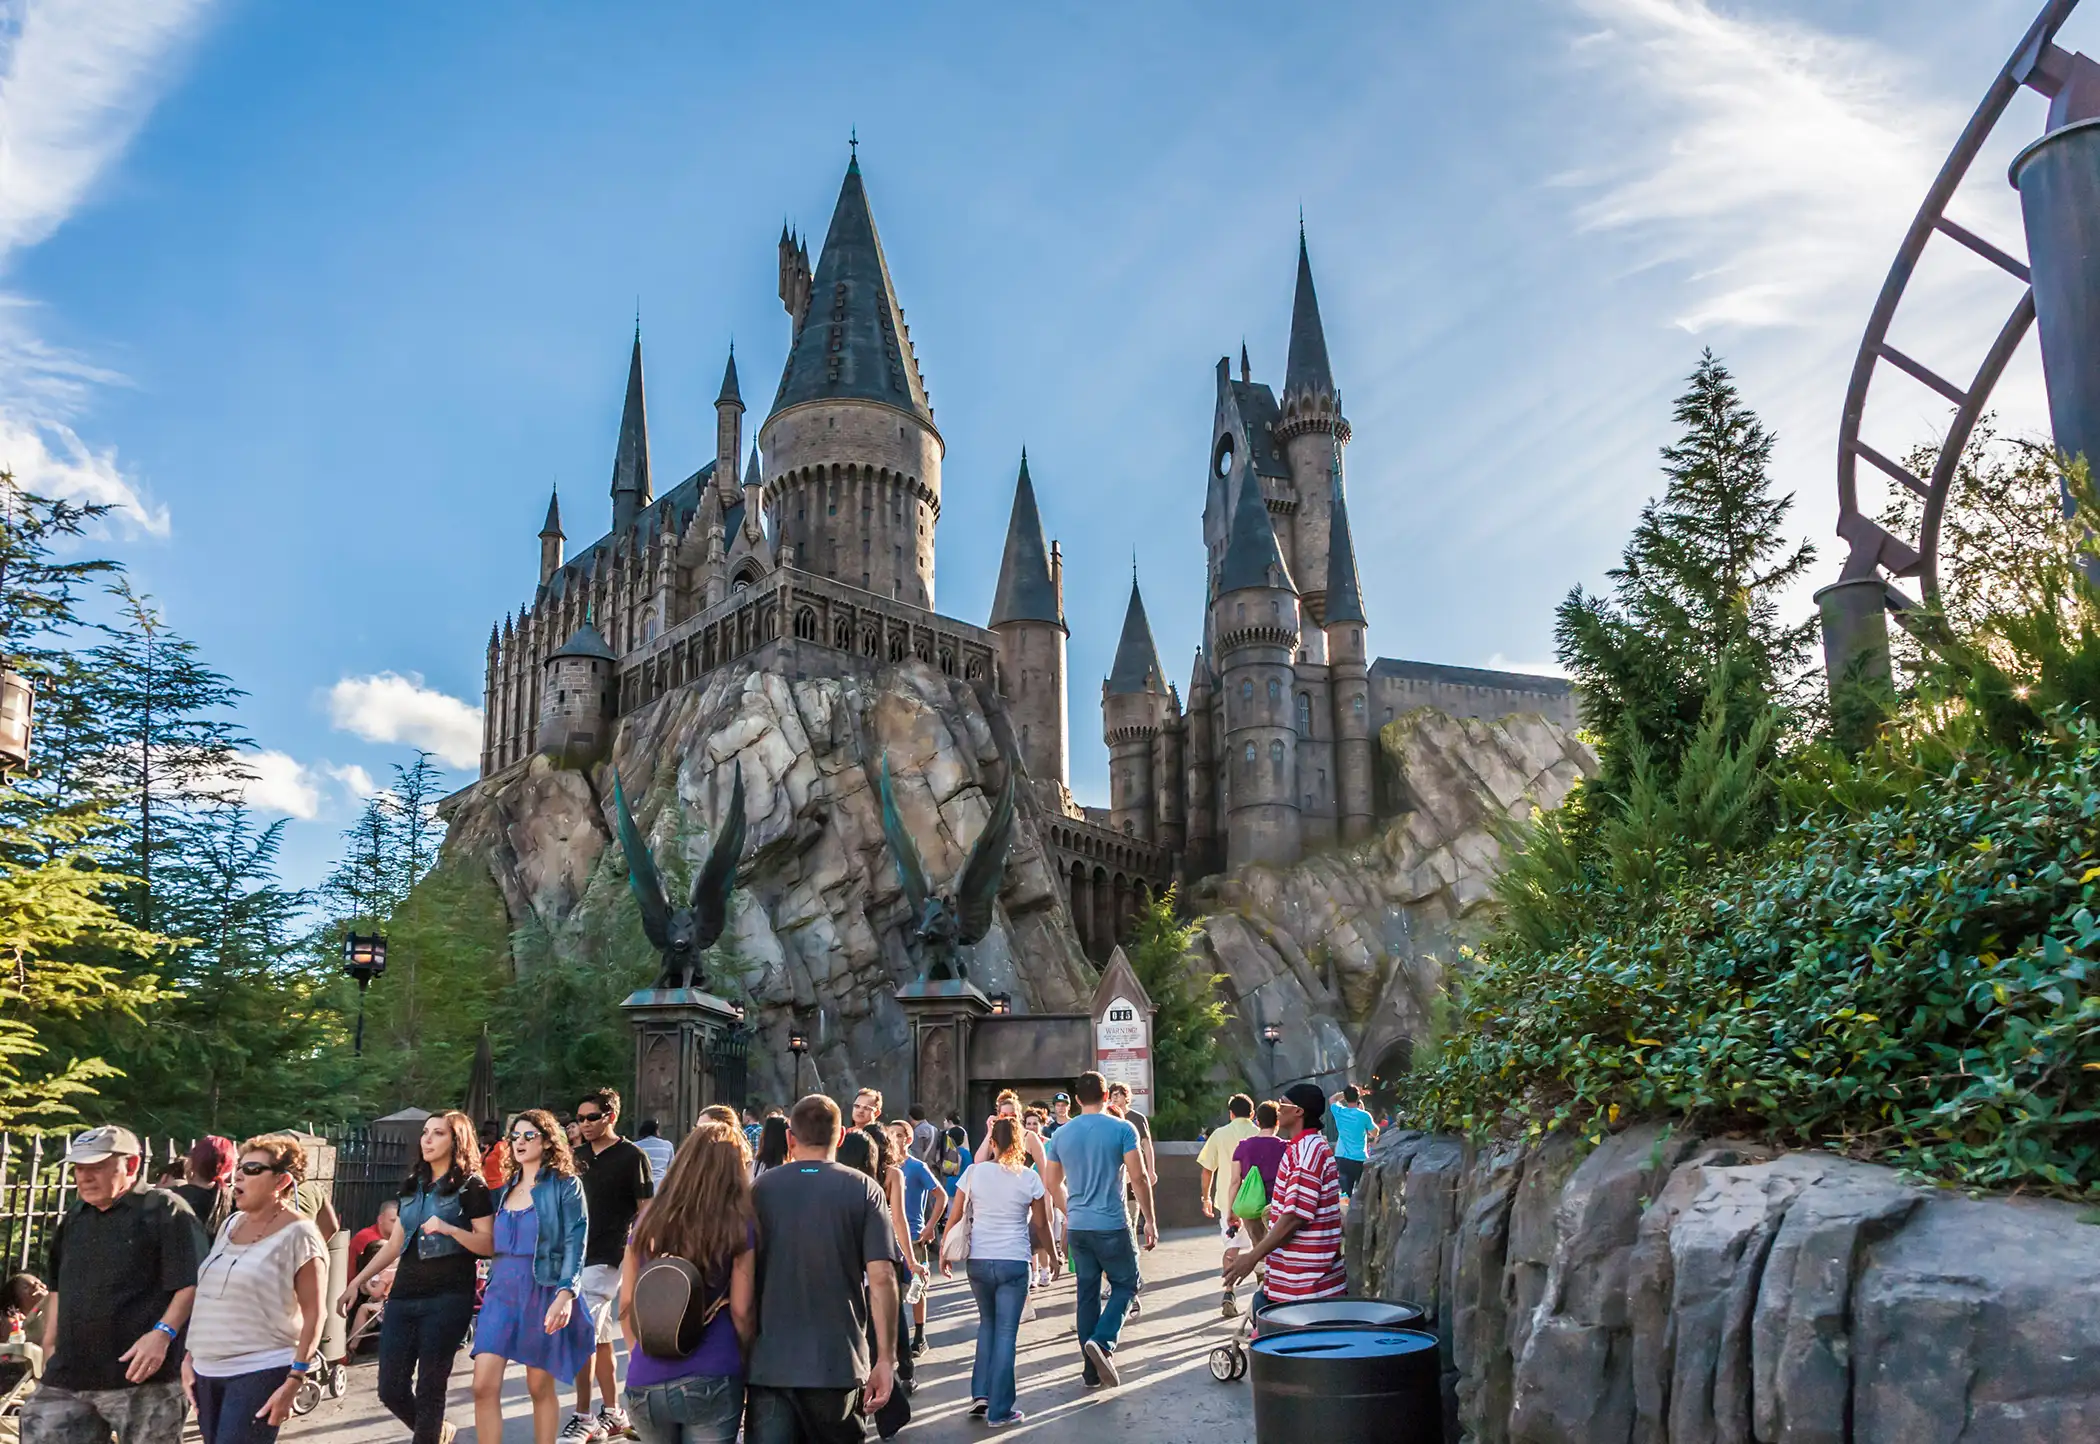 The Wizarding World of Harry Potter at Universal Studios Islands of Adventure, Orlando, FL.